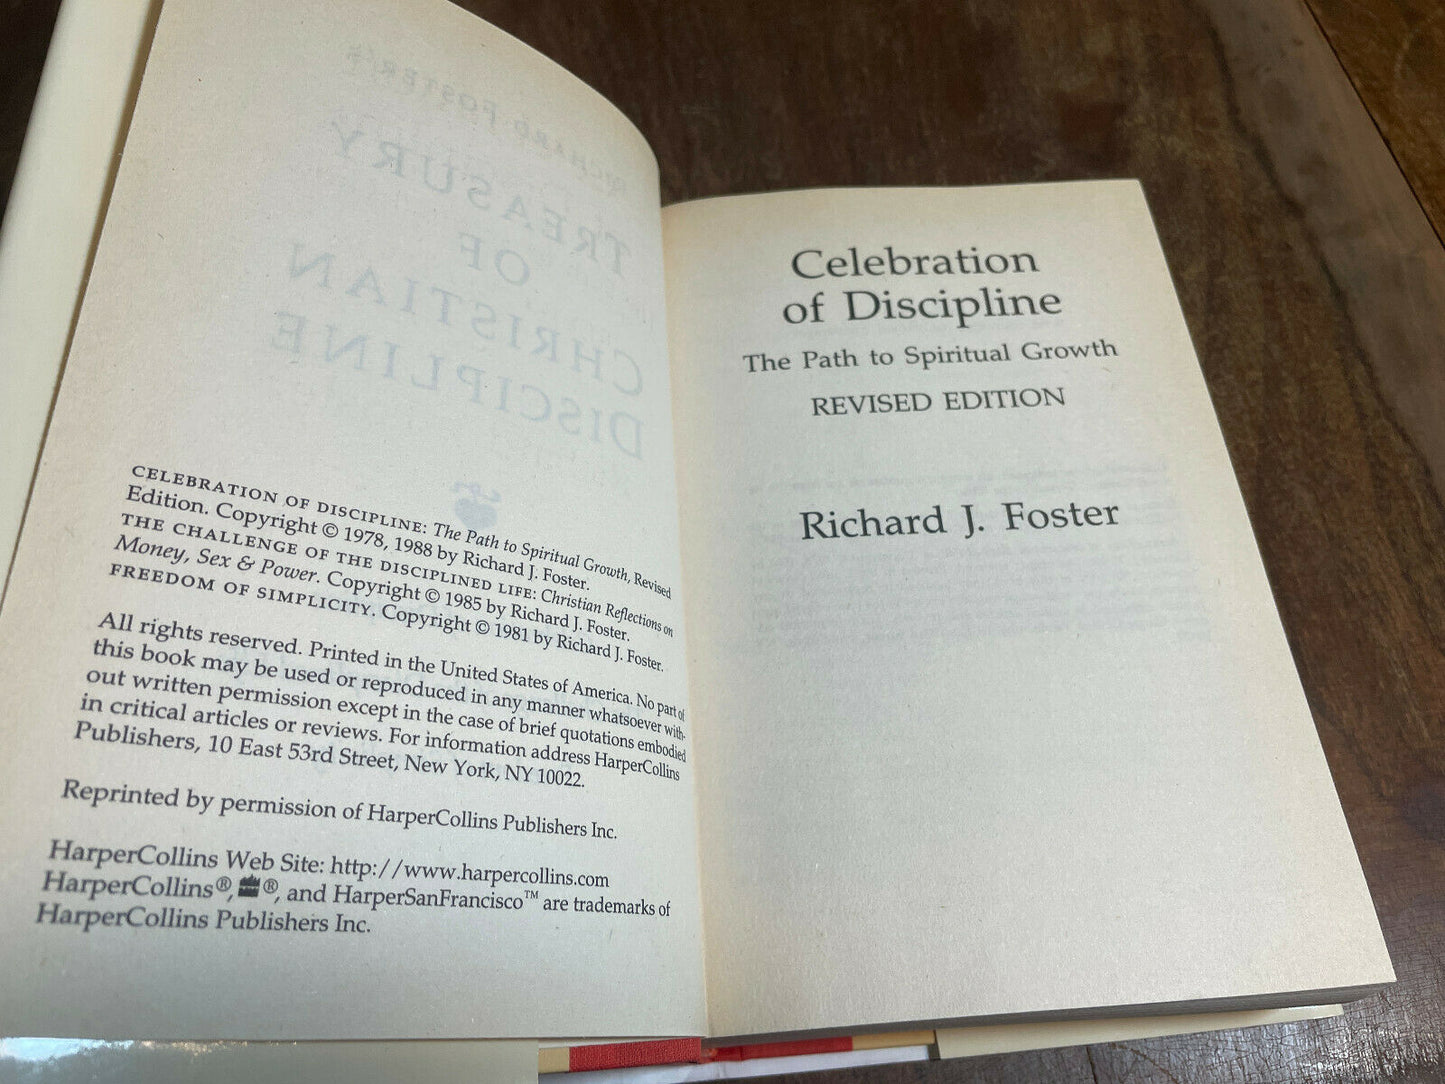 RICHARD FOSTER'S "TREASURY Of Christian Discipline (Z1)